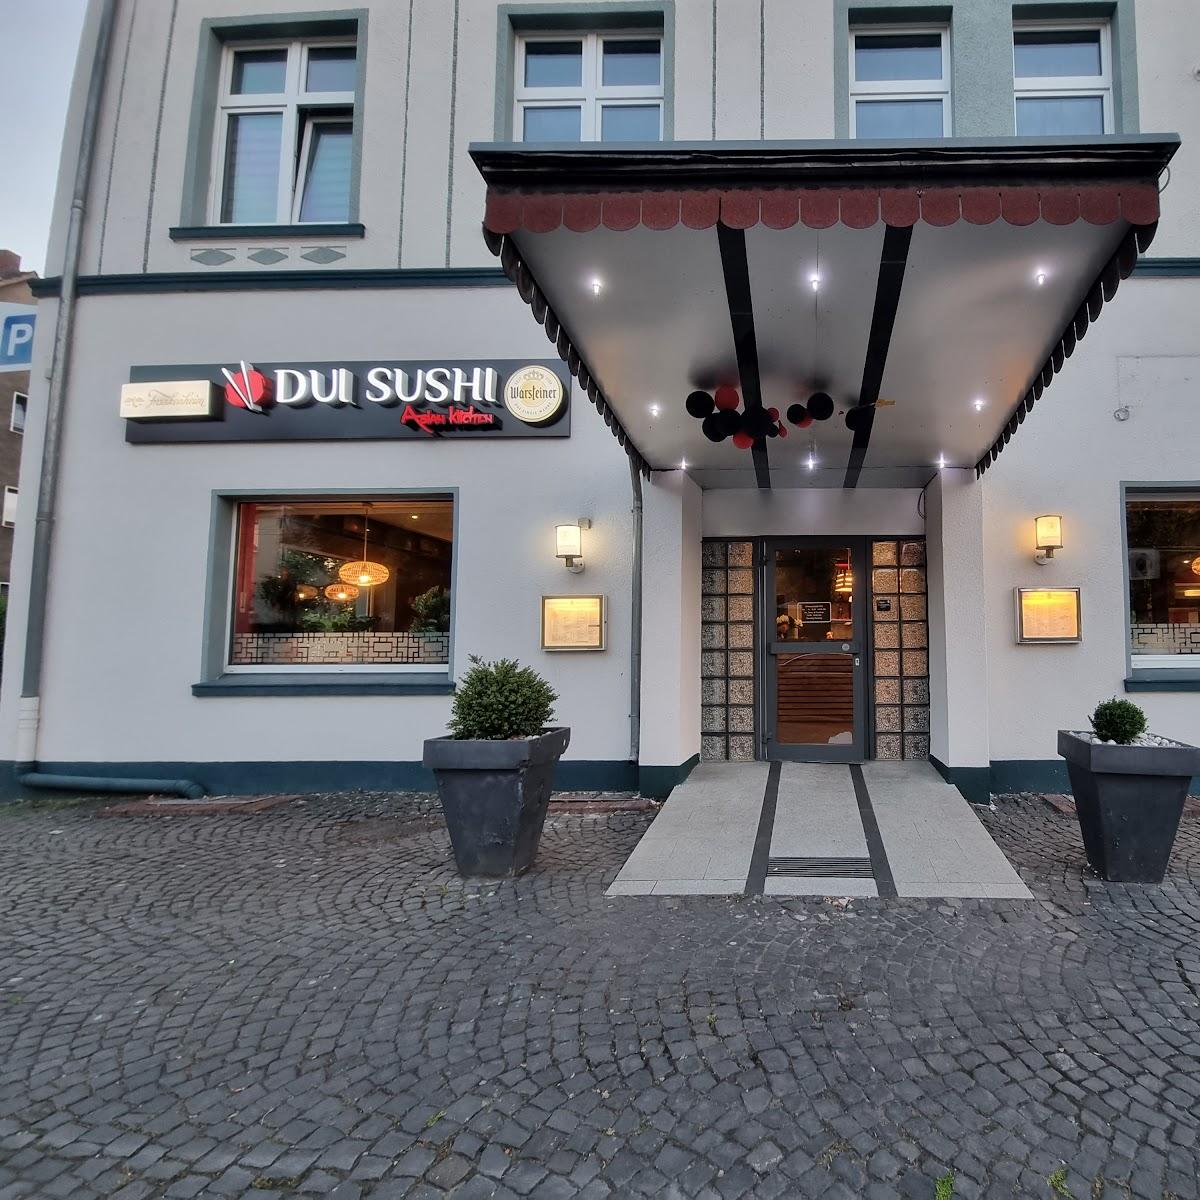 Restaurant "Dui Sushi Restaurant in" in Bochum